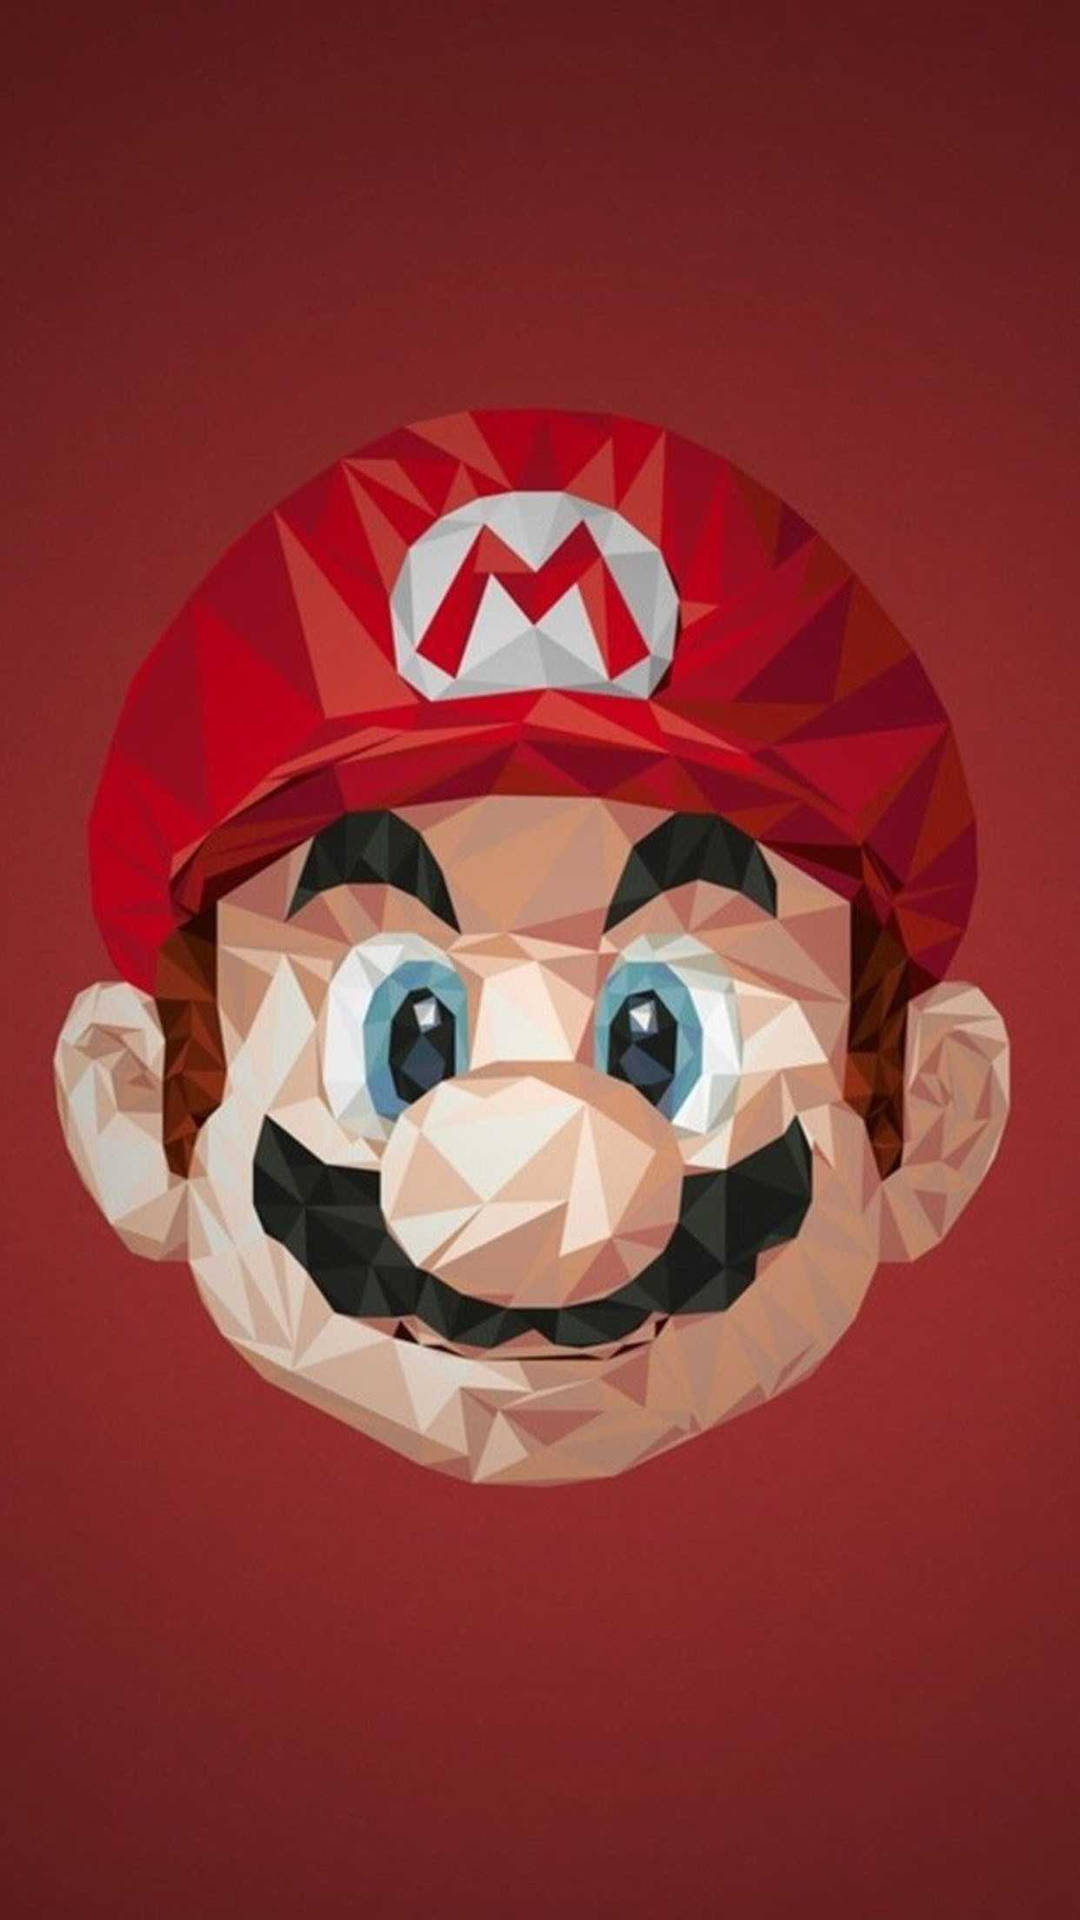 Super Mario Nintendo Character Polygon Art Wallpaper